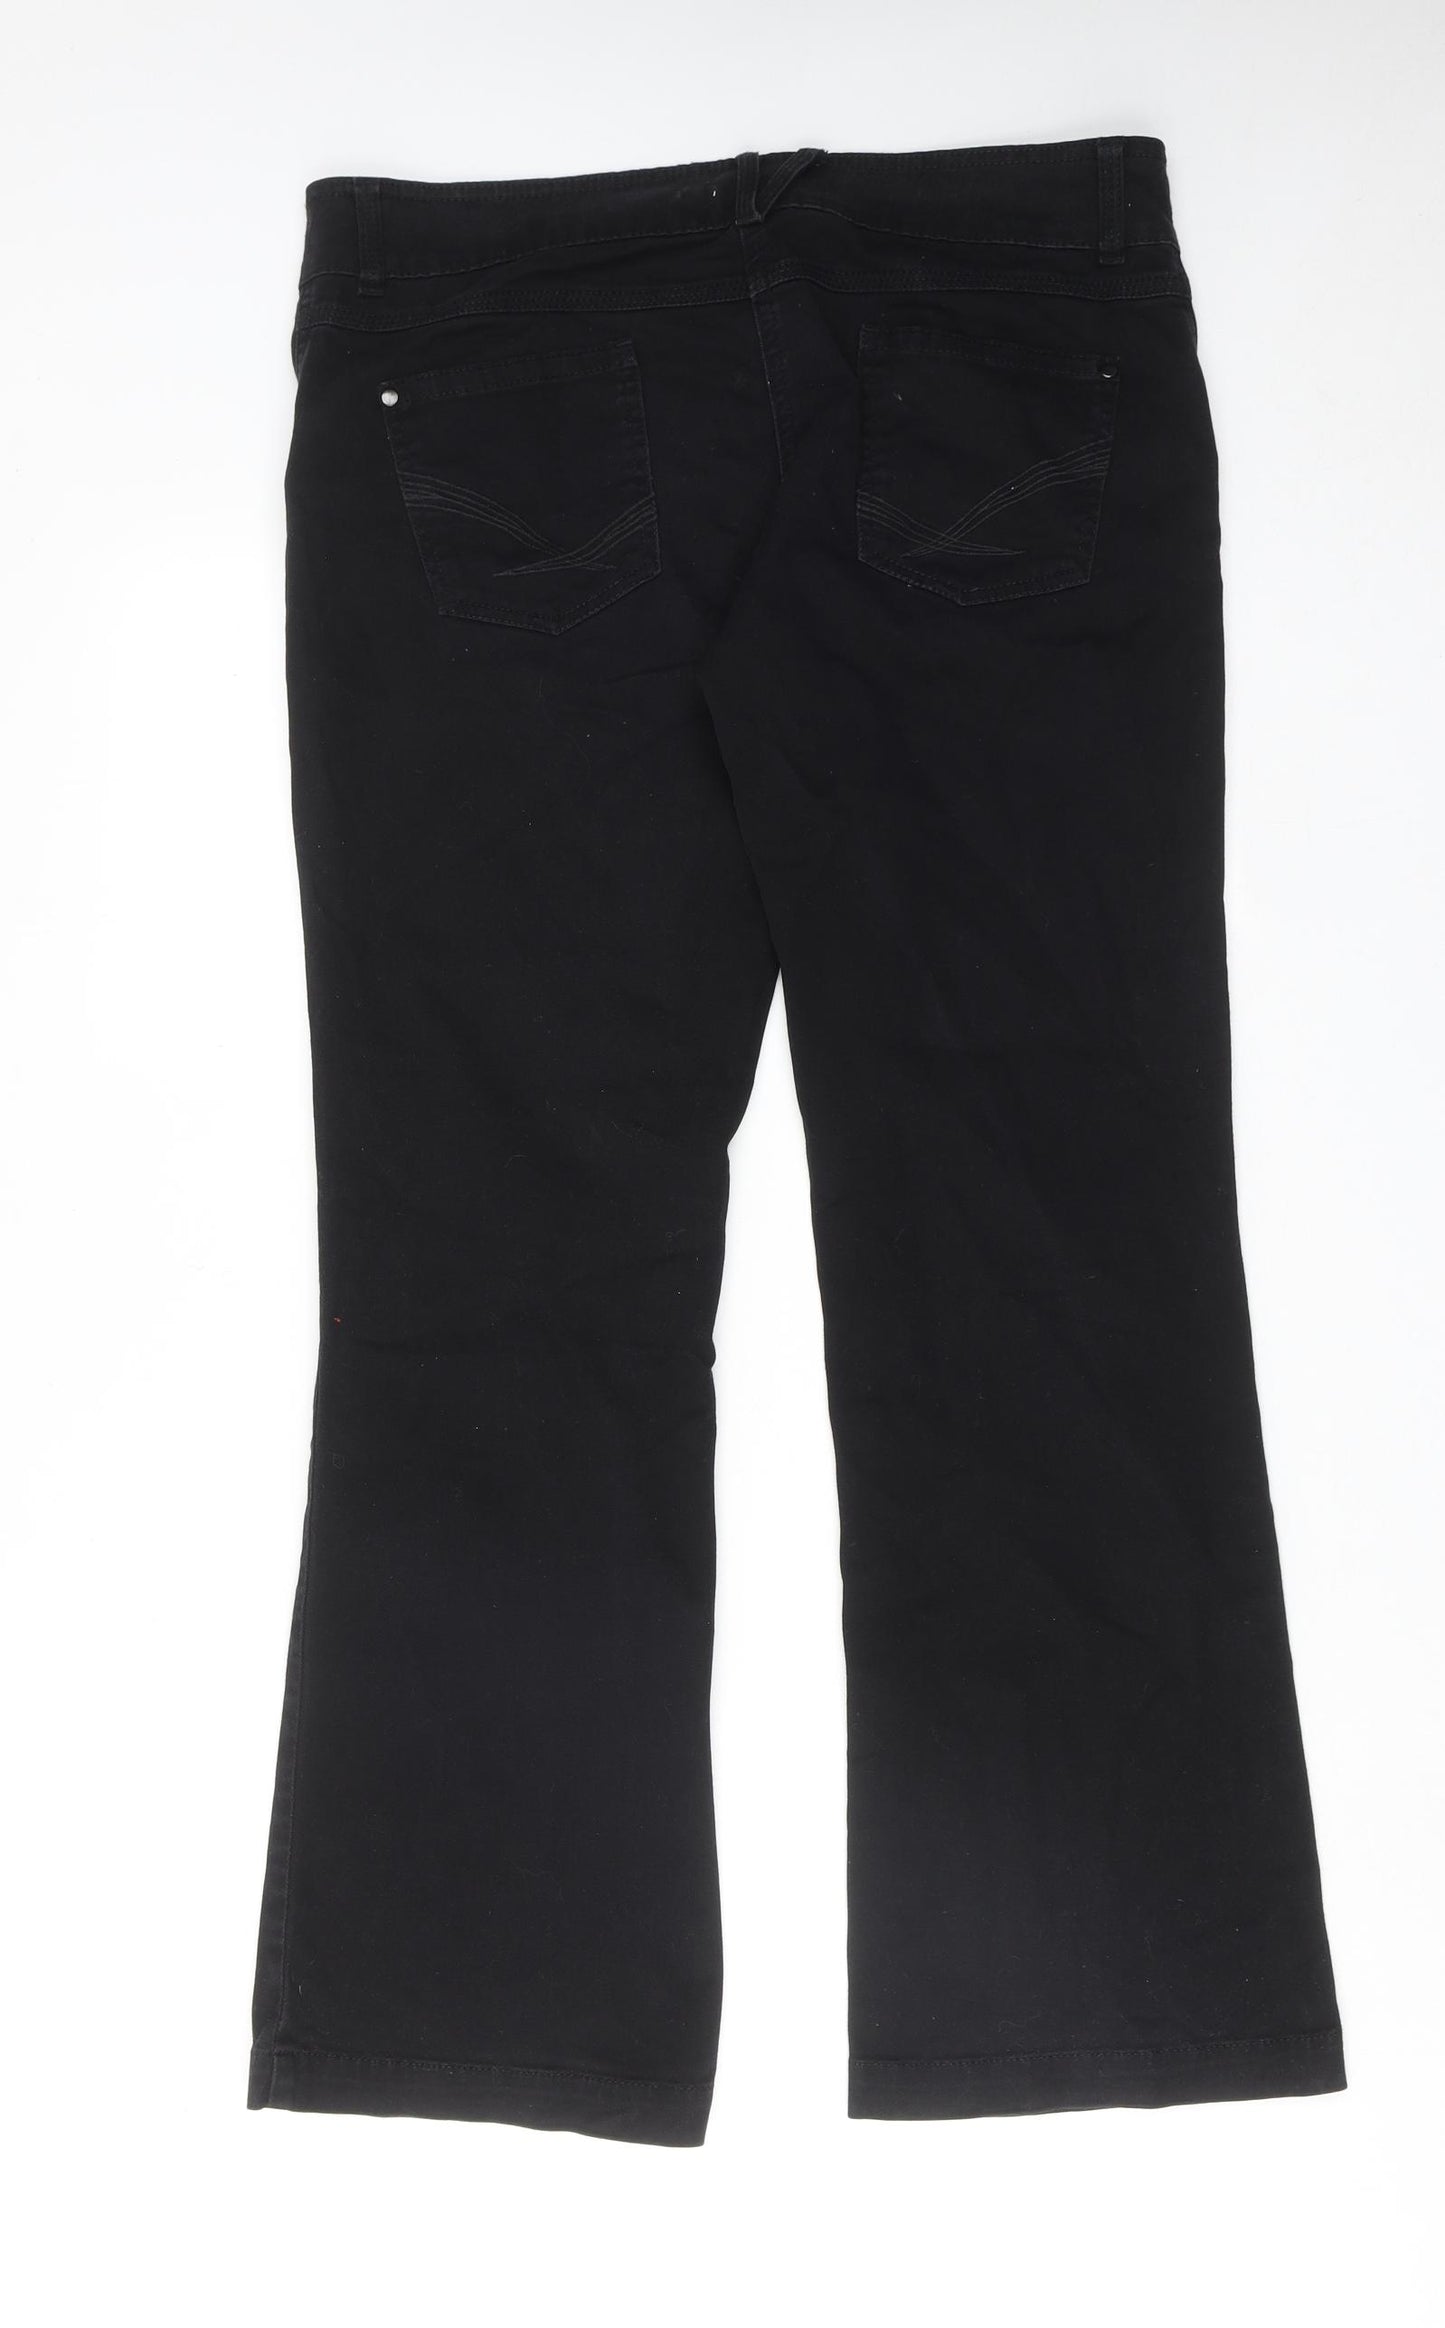 NEXT Womens Black Cotton Bootcut Jeans Size 14 Slim Zip